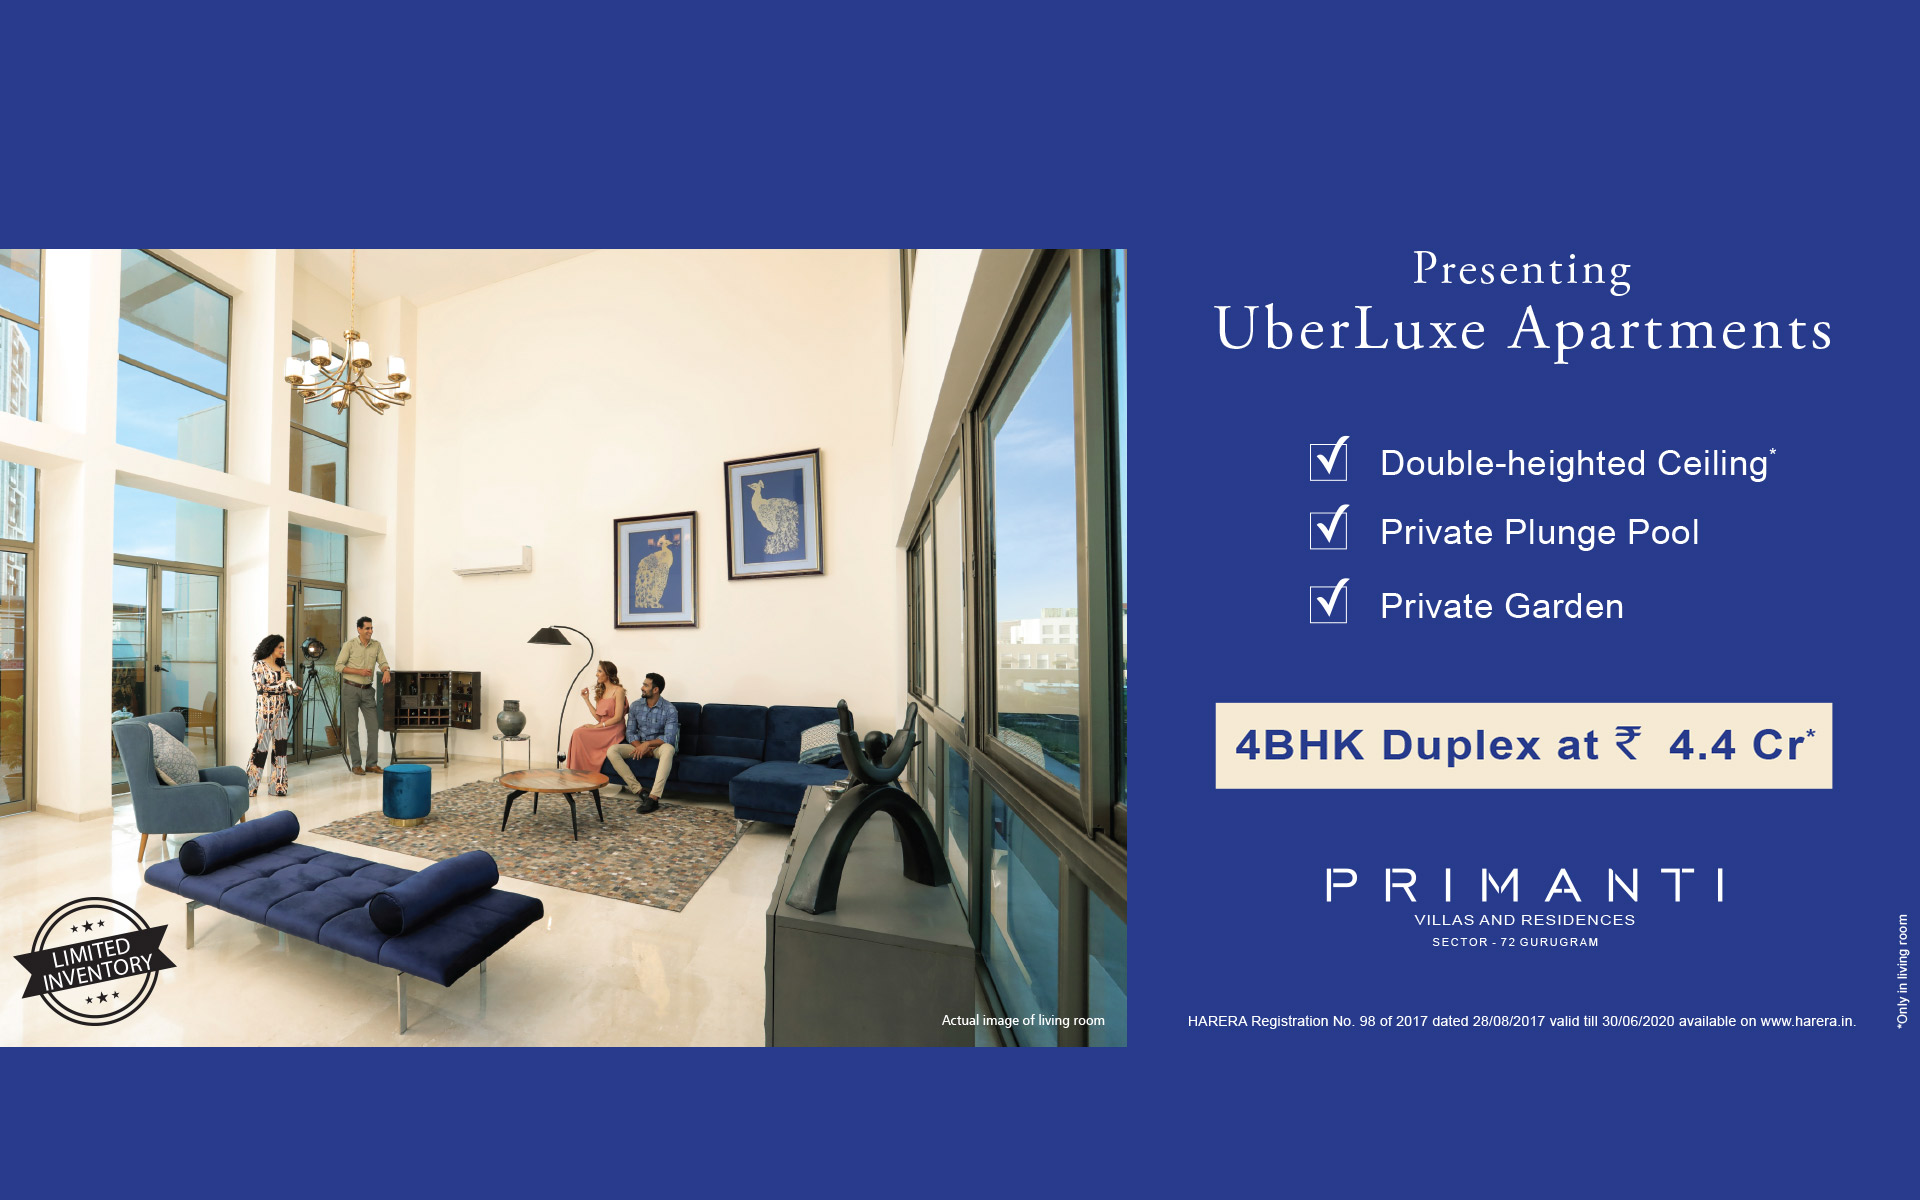 Presenting uber-luxe 4 bhk duplex at Rs. 4.4 Cr. at TATA Primanti in Gurgaon Update